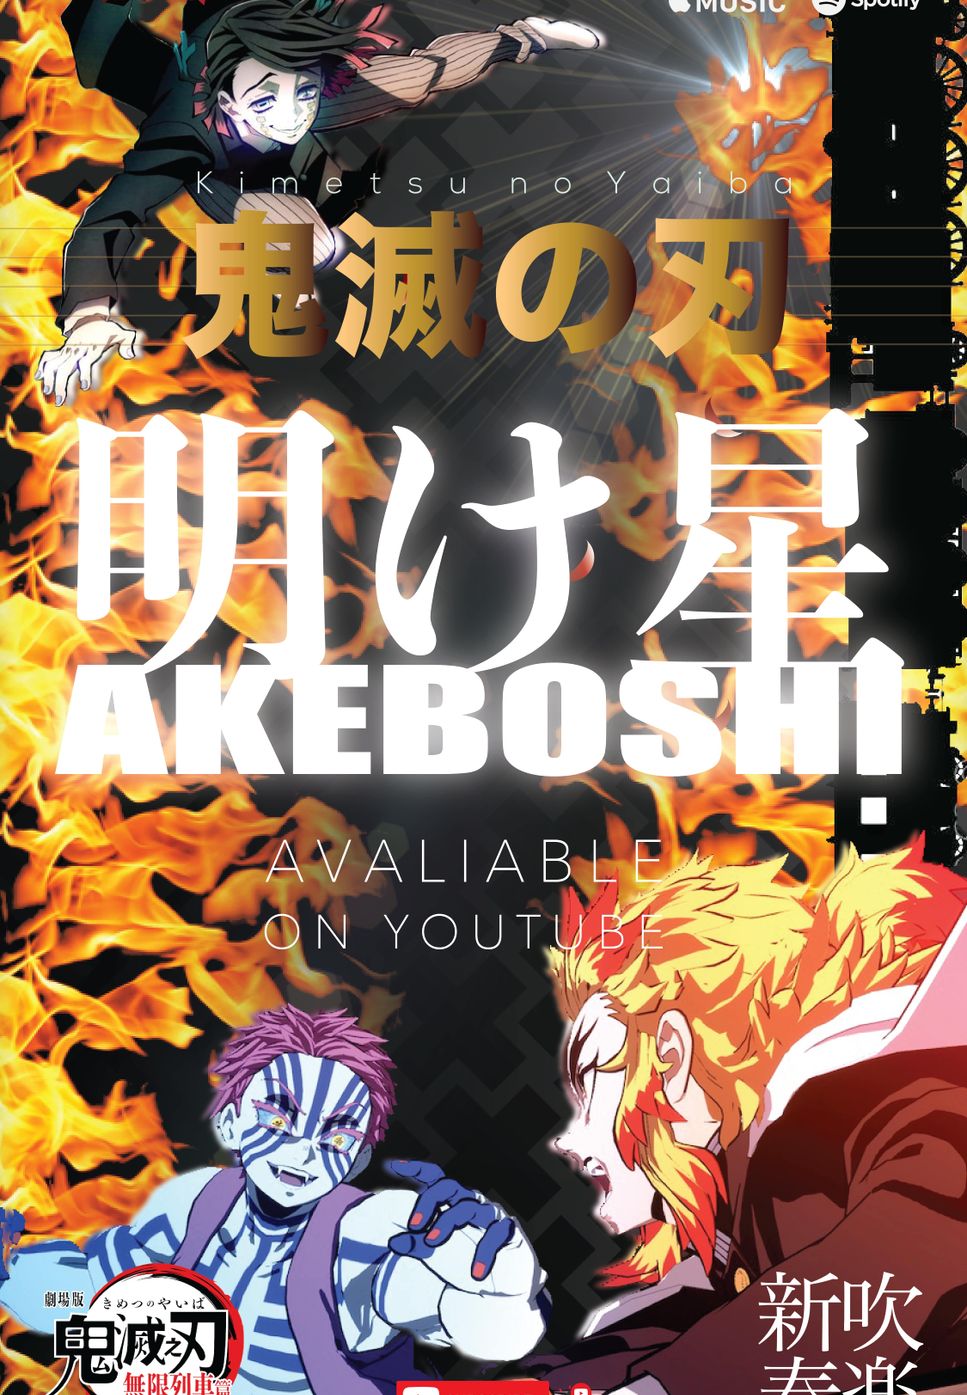 Kimetsu No Yaiba Wugen Train TV series - Akeboshi (Windband Arrangement) by Littlebrother Kel.L